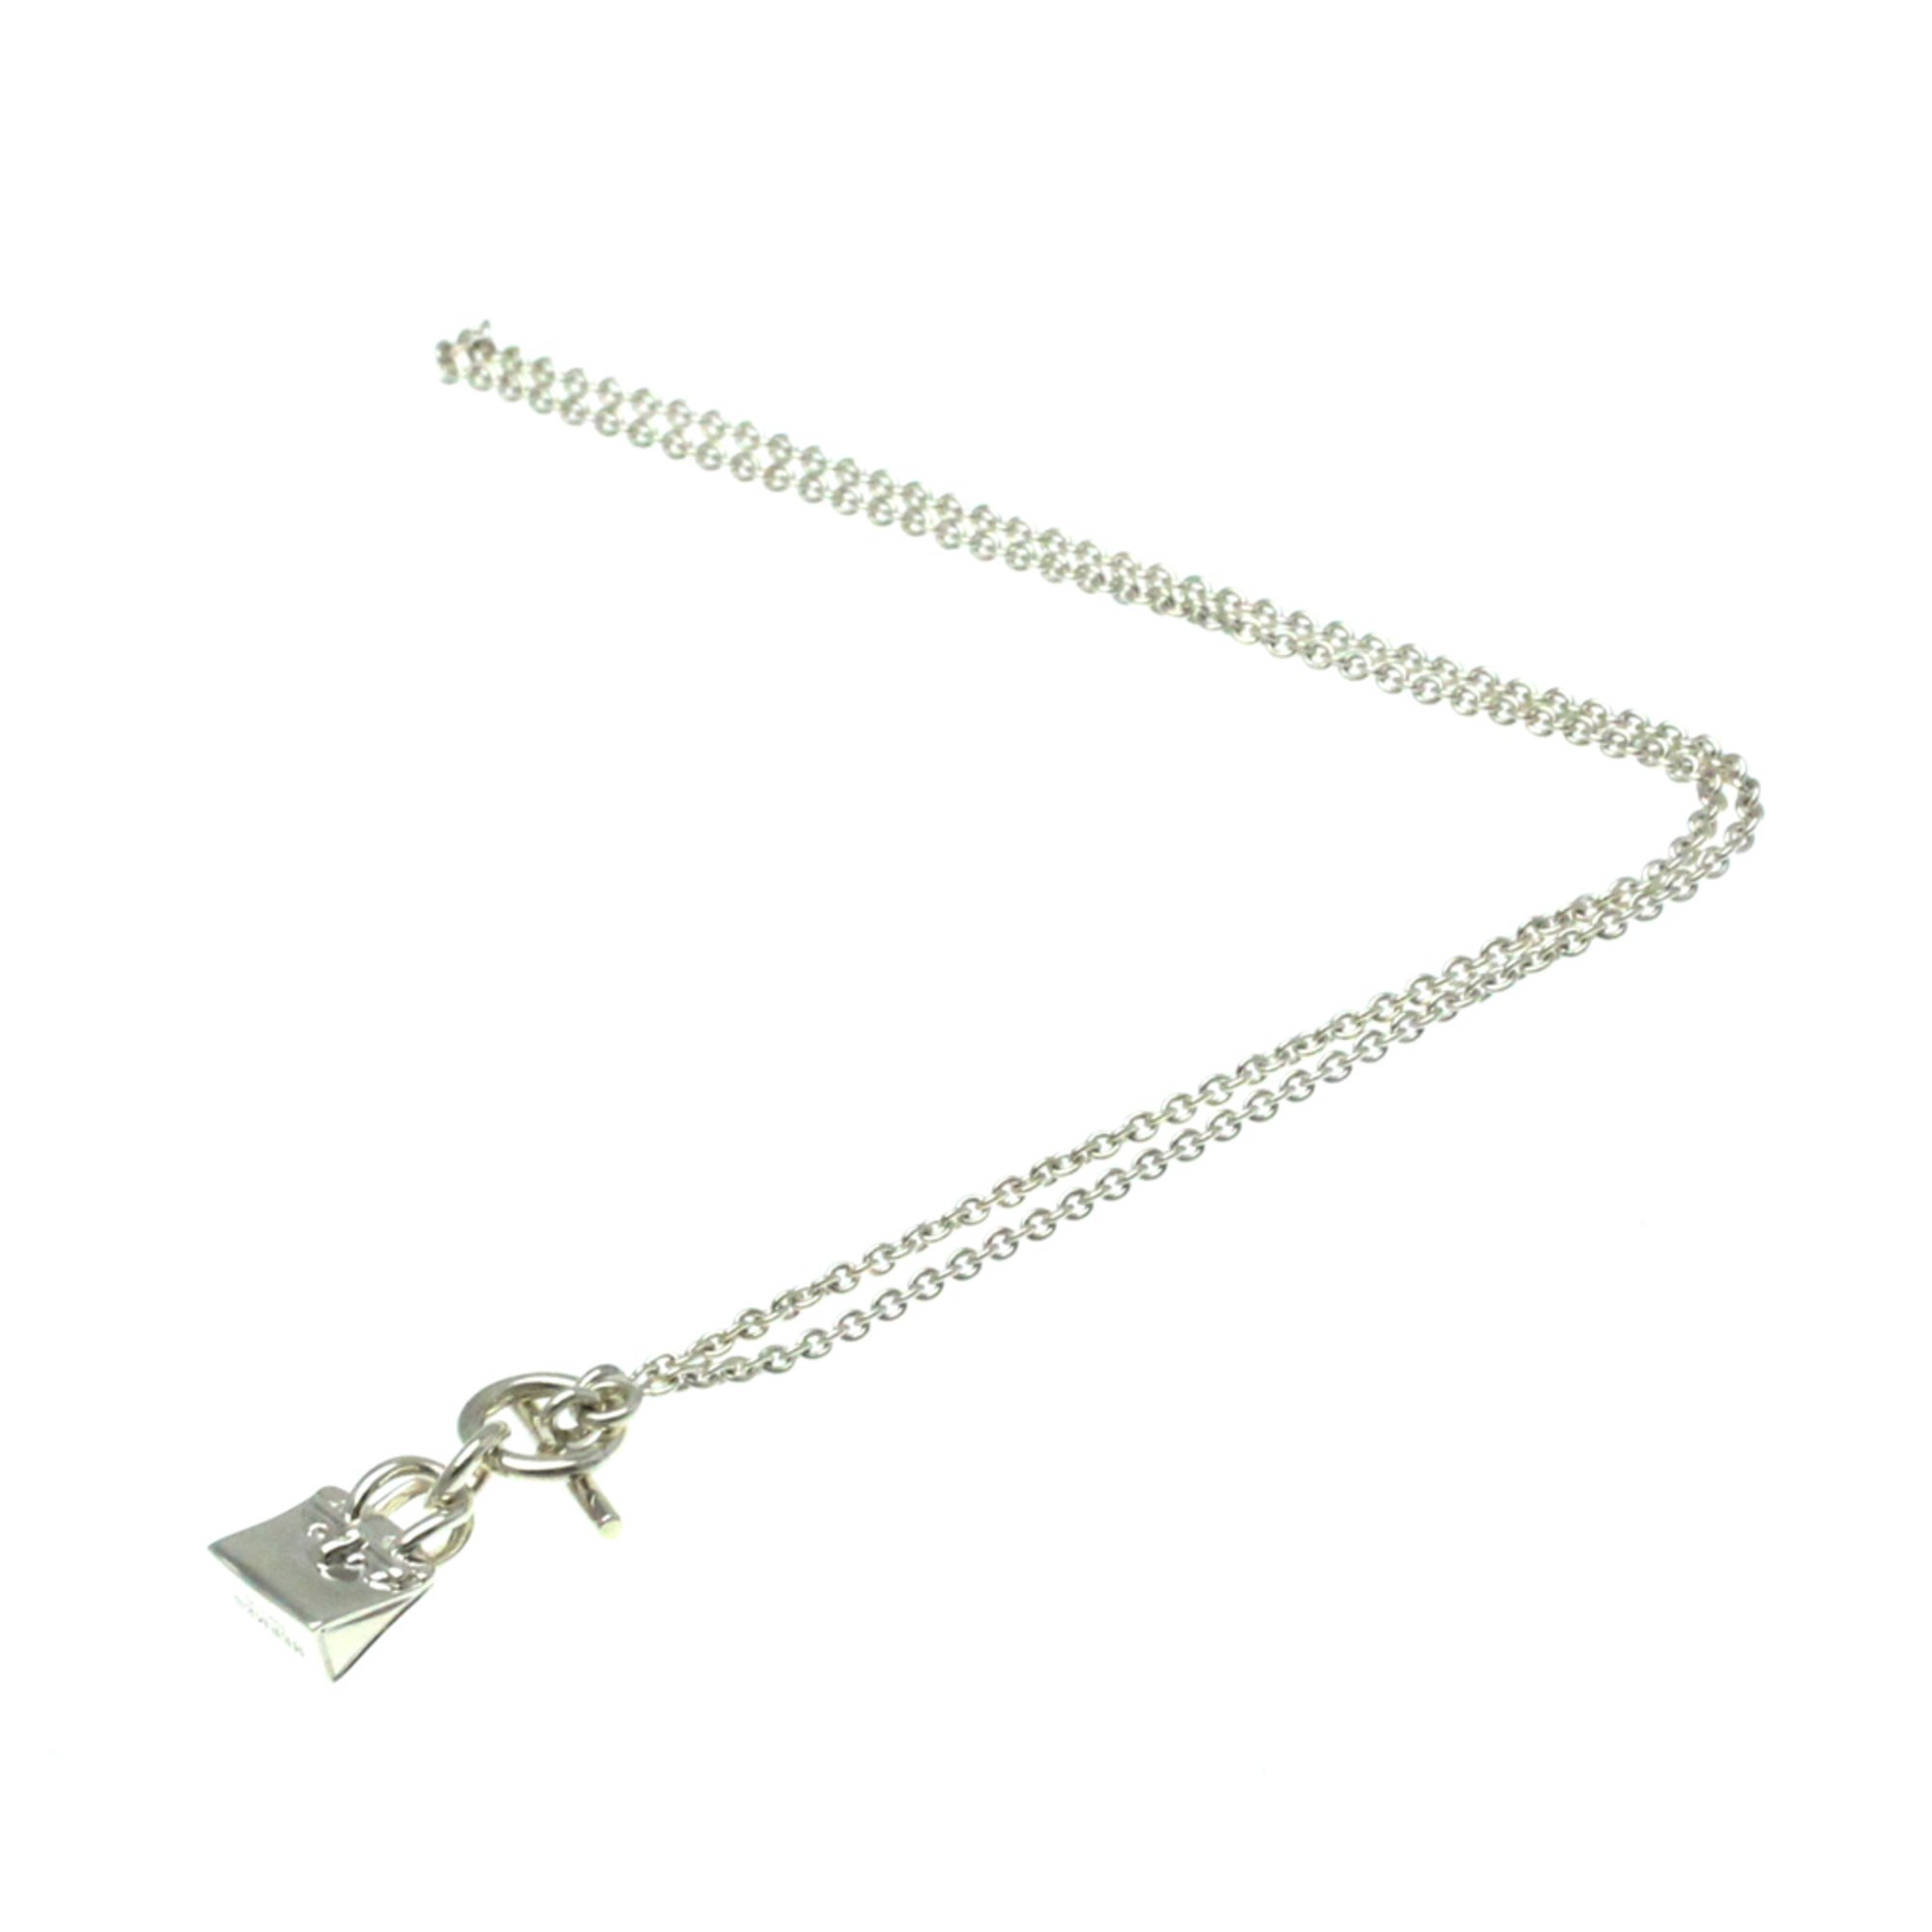 Hermes Birkin Motif Necklace Silver 925 No Stone Men,Women Fashion Pendant Necklace (Silver)